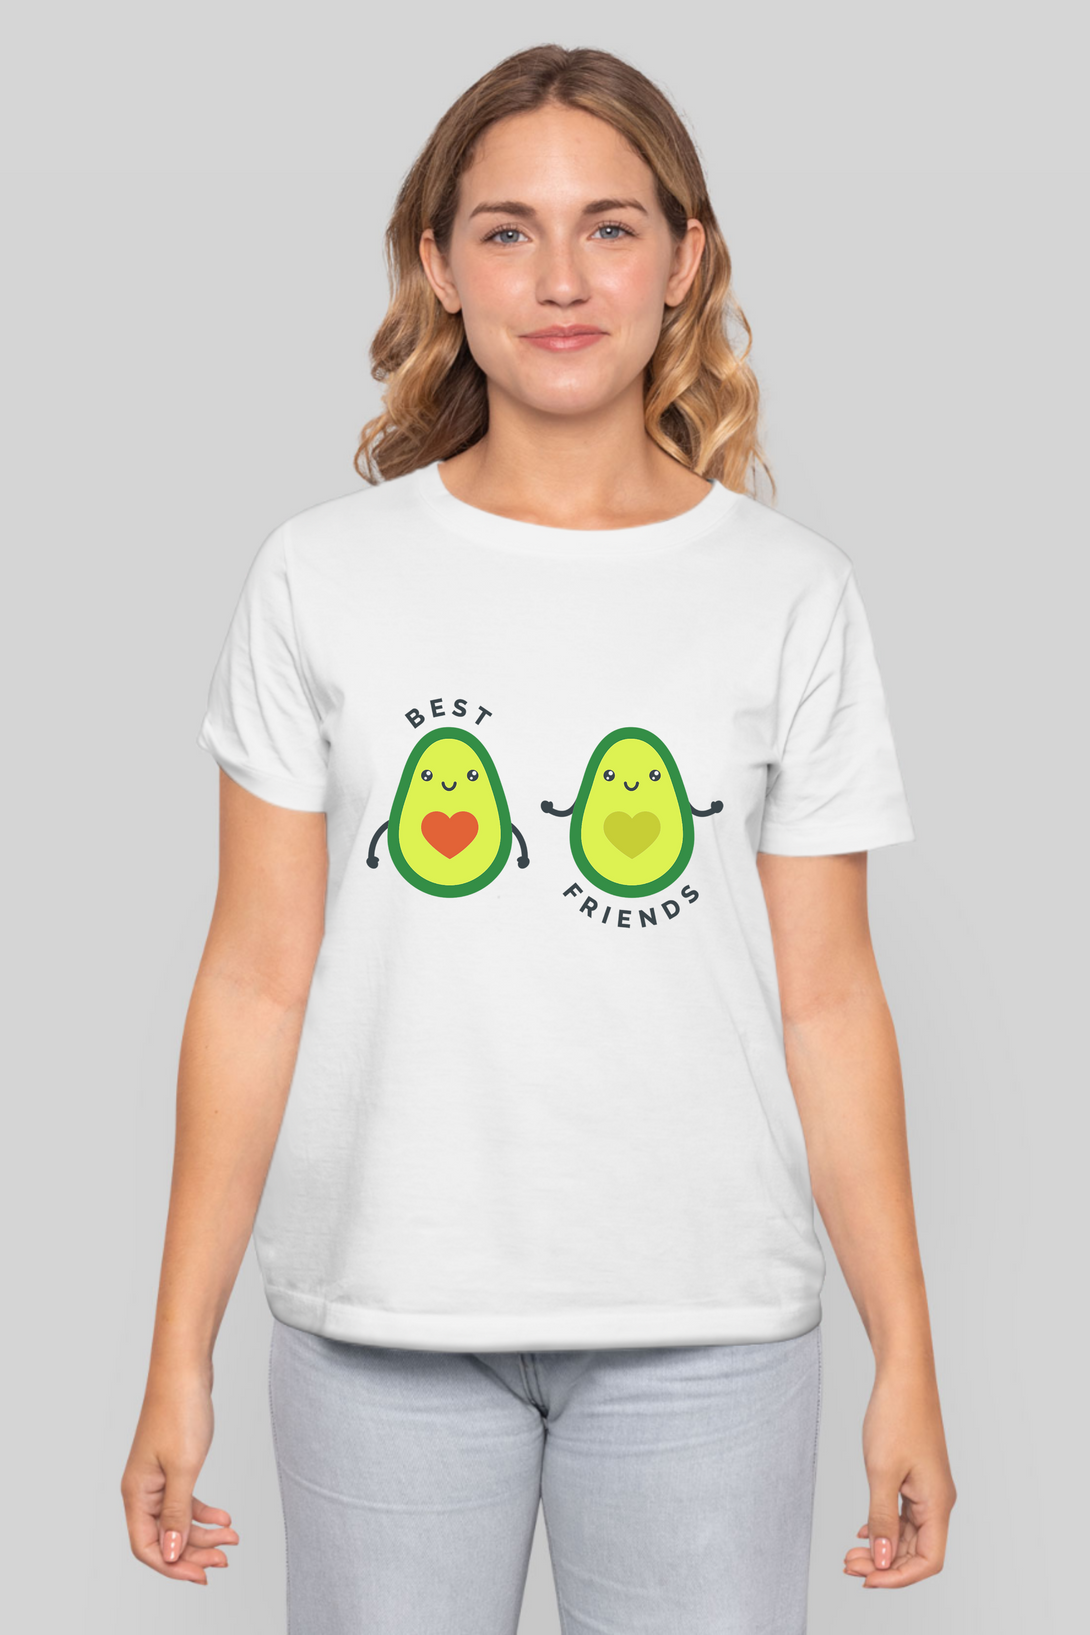 Avocado Friends Printed T-Shirt For Women - WowWaves - 7